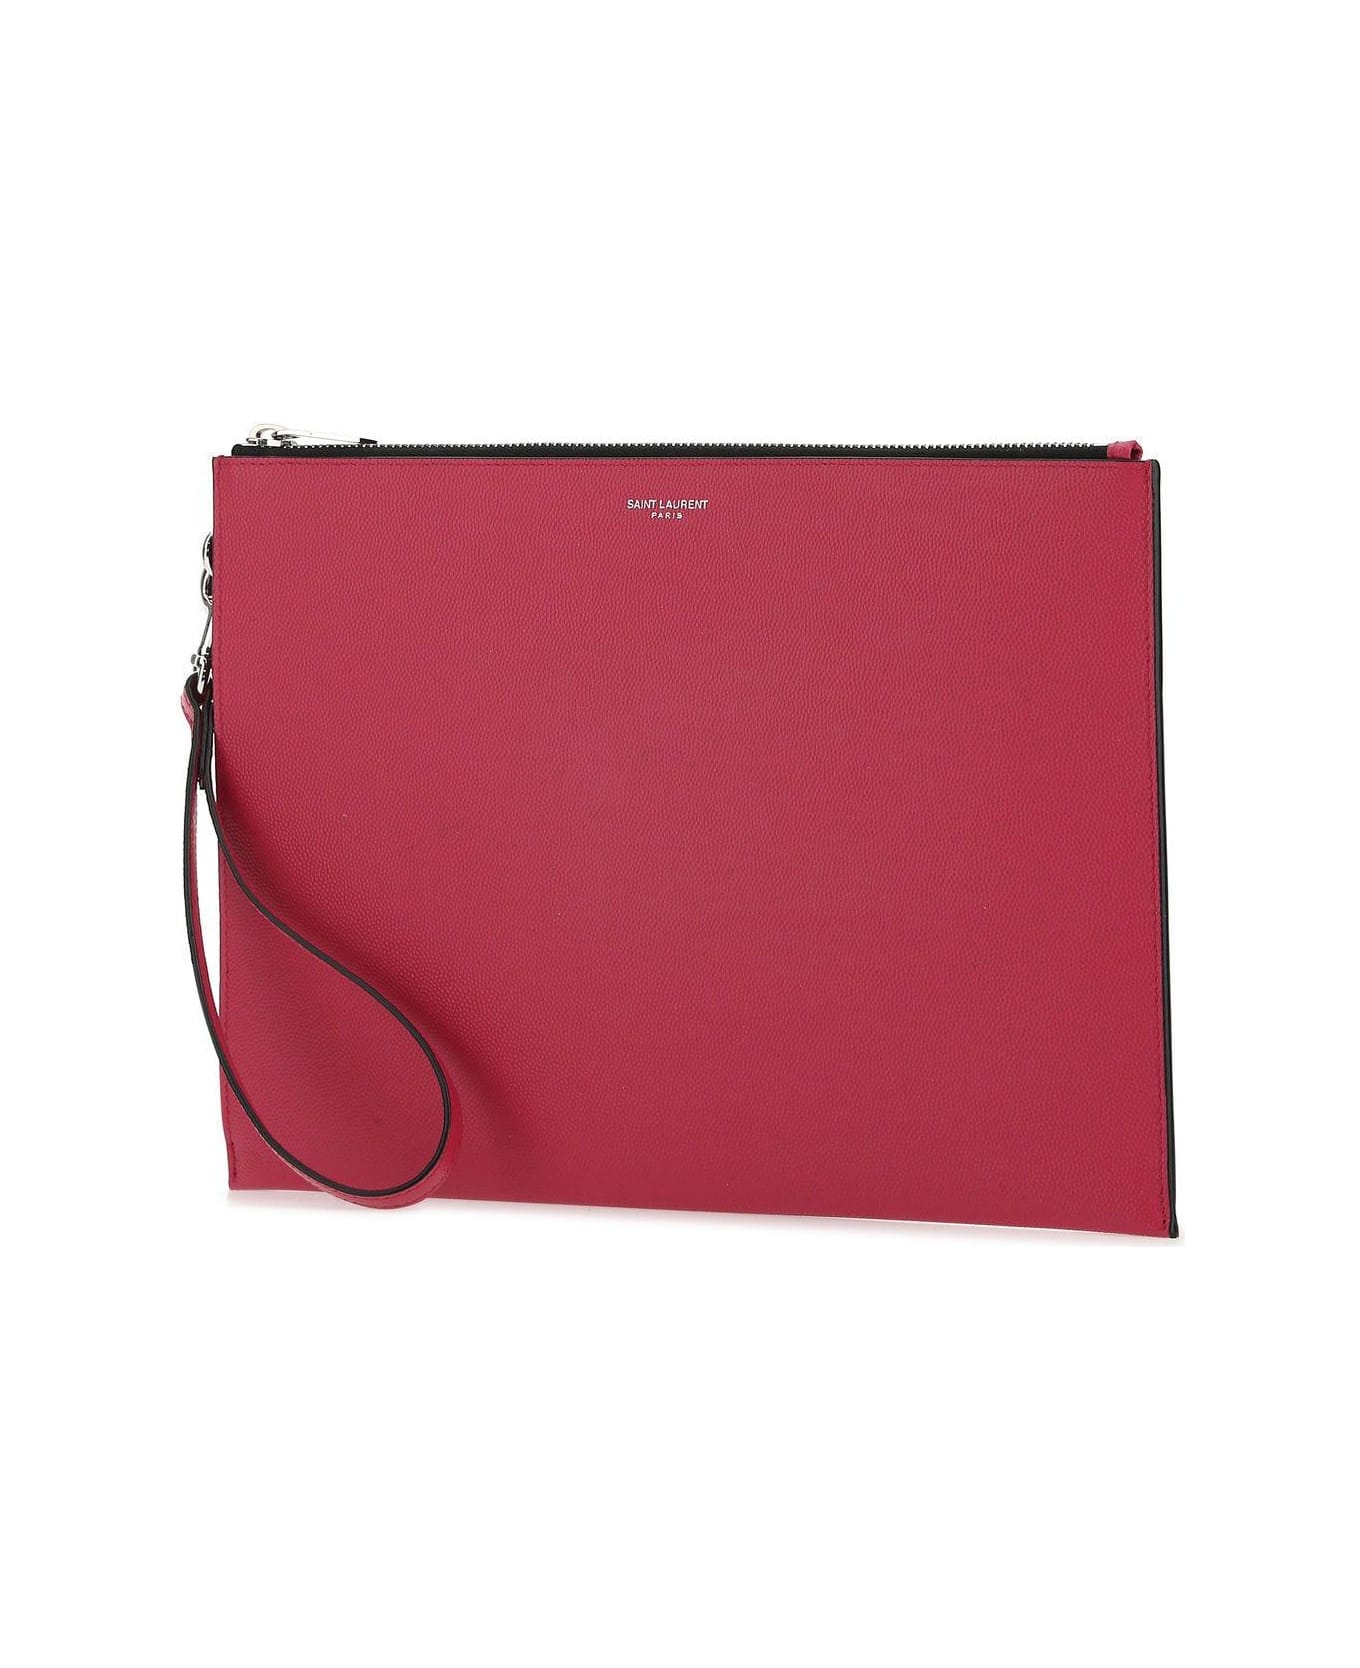 Saint Laurent Fuchsia Leather Tablet Case - FUCHSIA